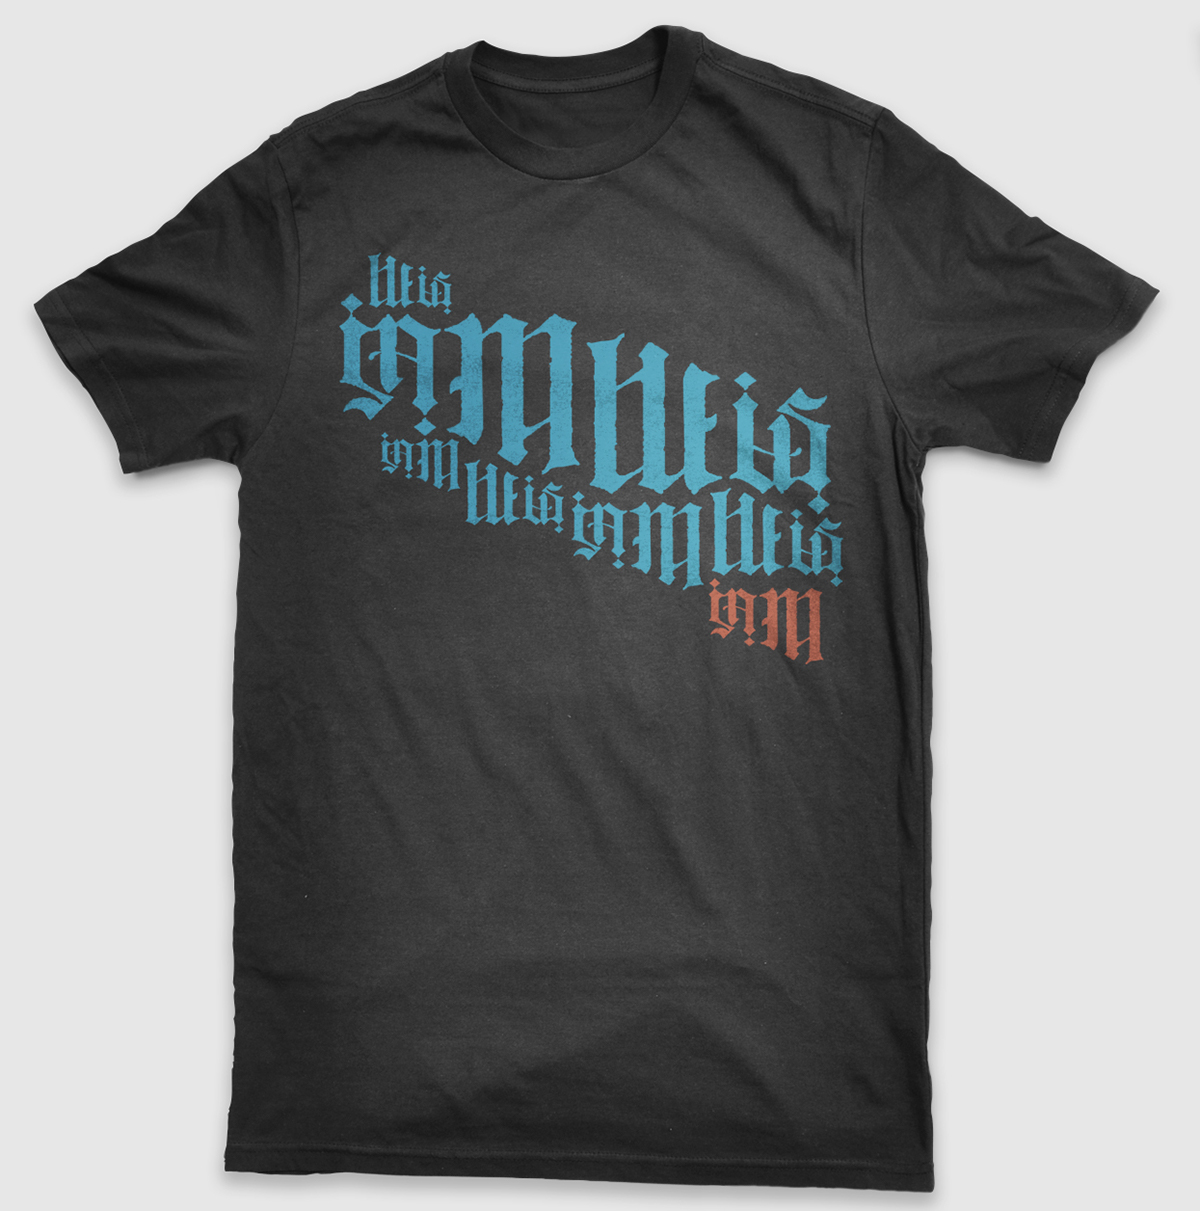 he is i am ambiagram series logo The Well church shirt T Shirt screenprint